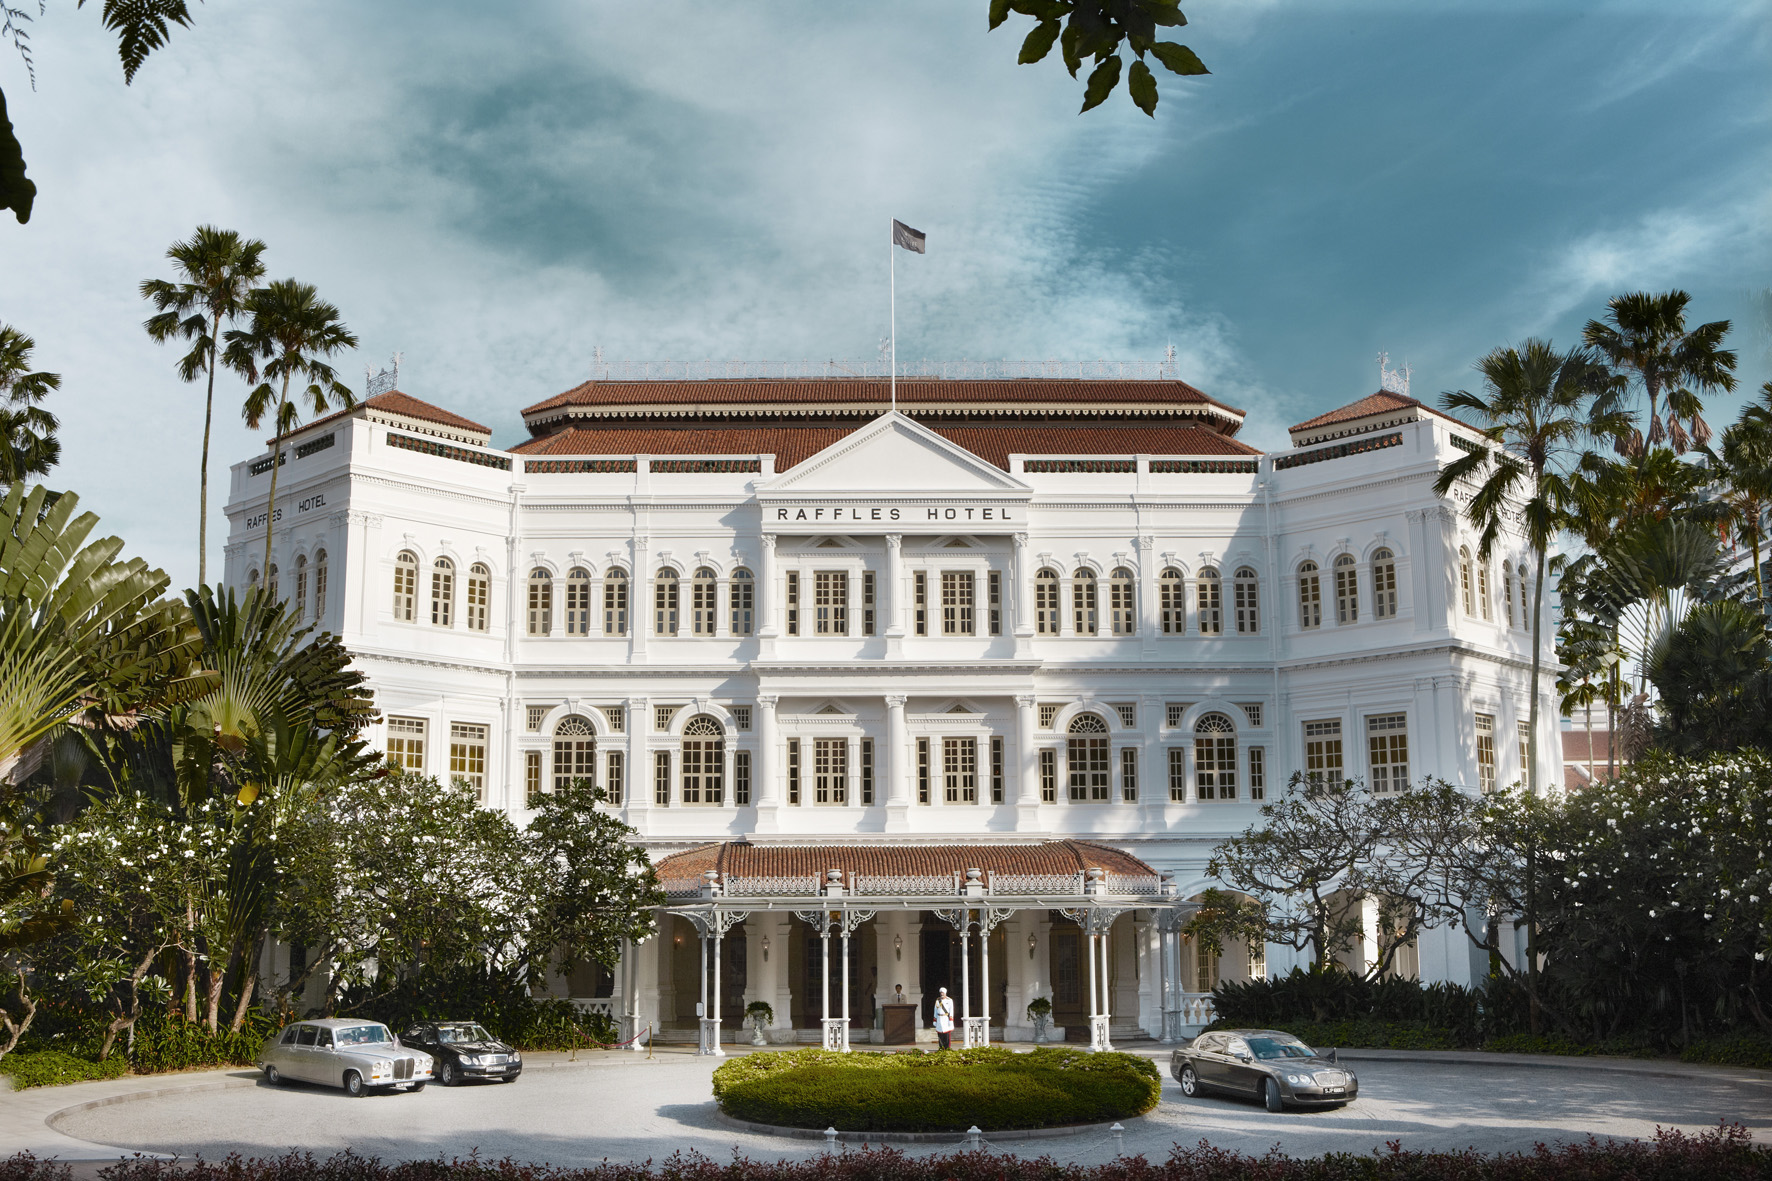 Raffles Hotel Singapore - Hotel Facade 1